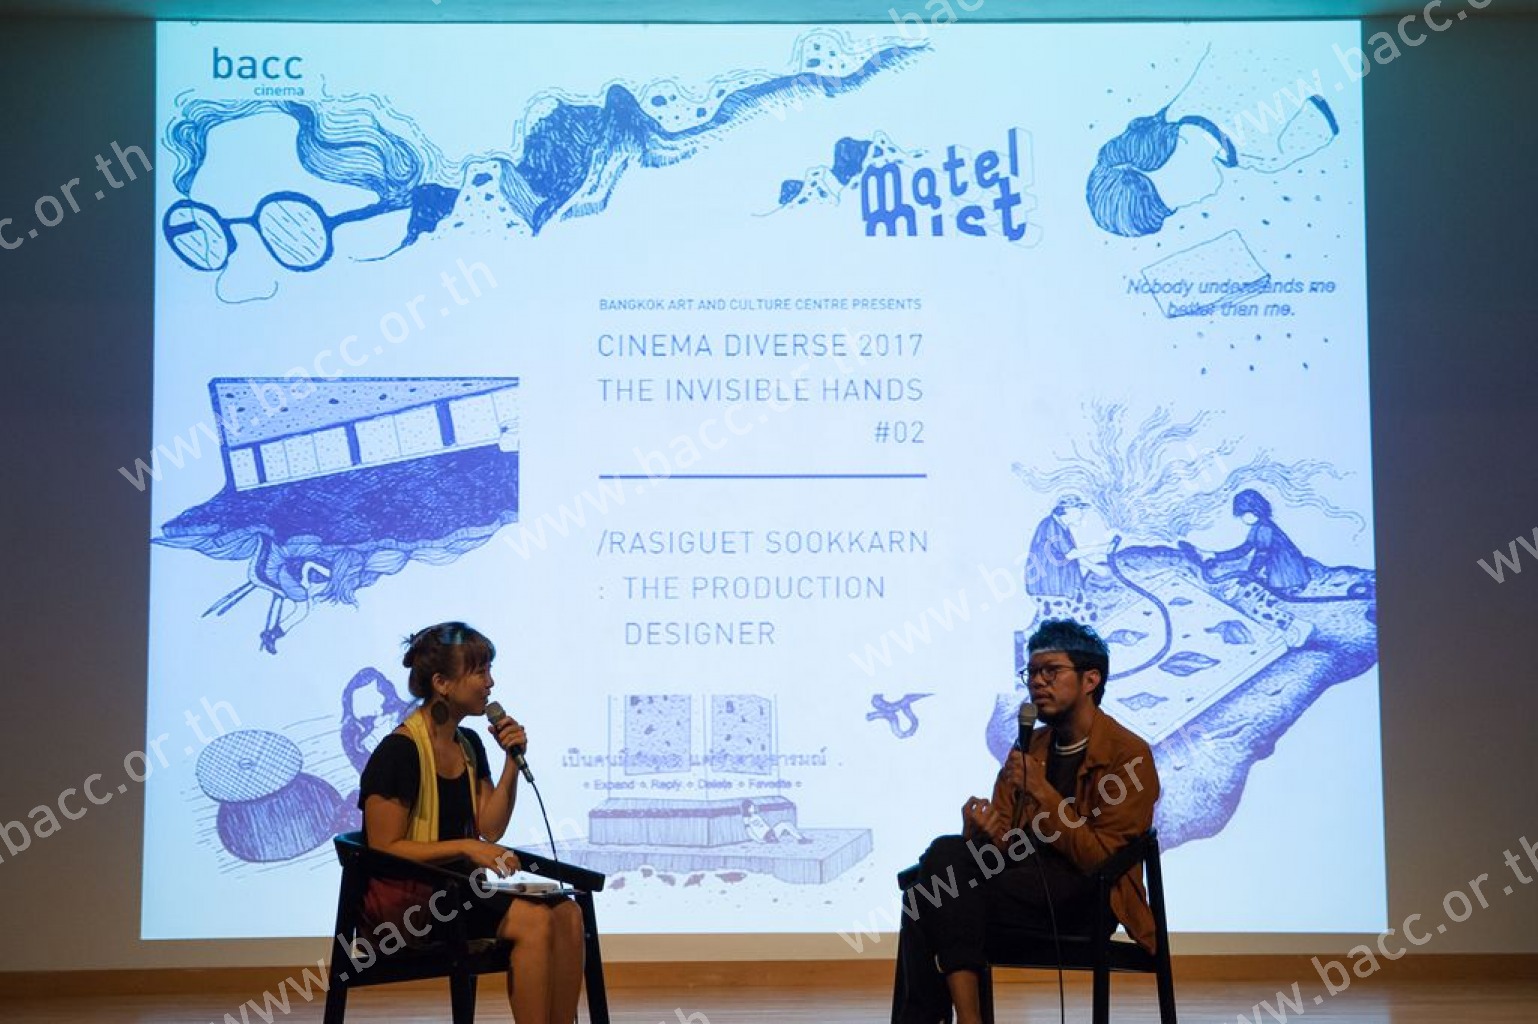 CINEMA DIVERSE 2017: The Invisible Hands 02 RASIGUET SOOKKARN (Production Designer)